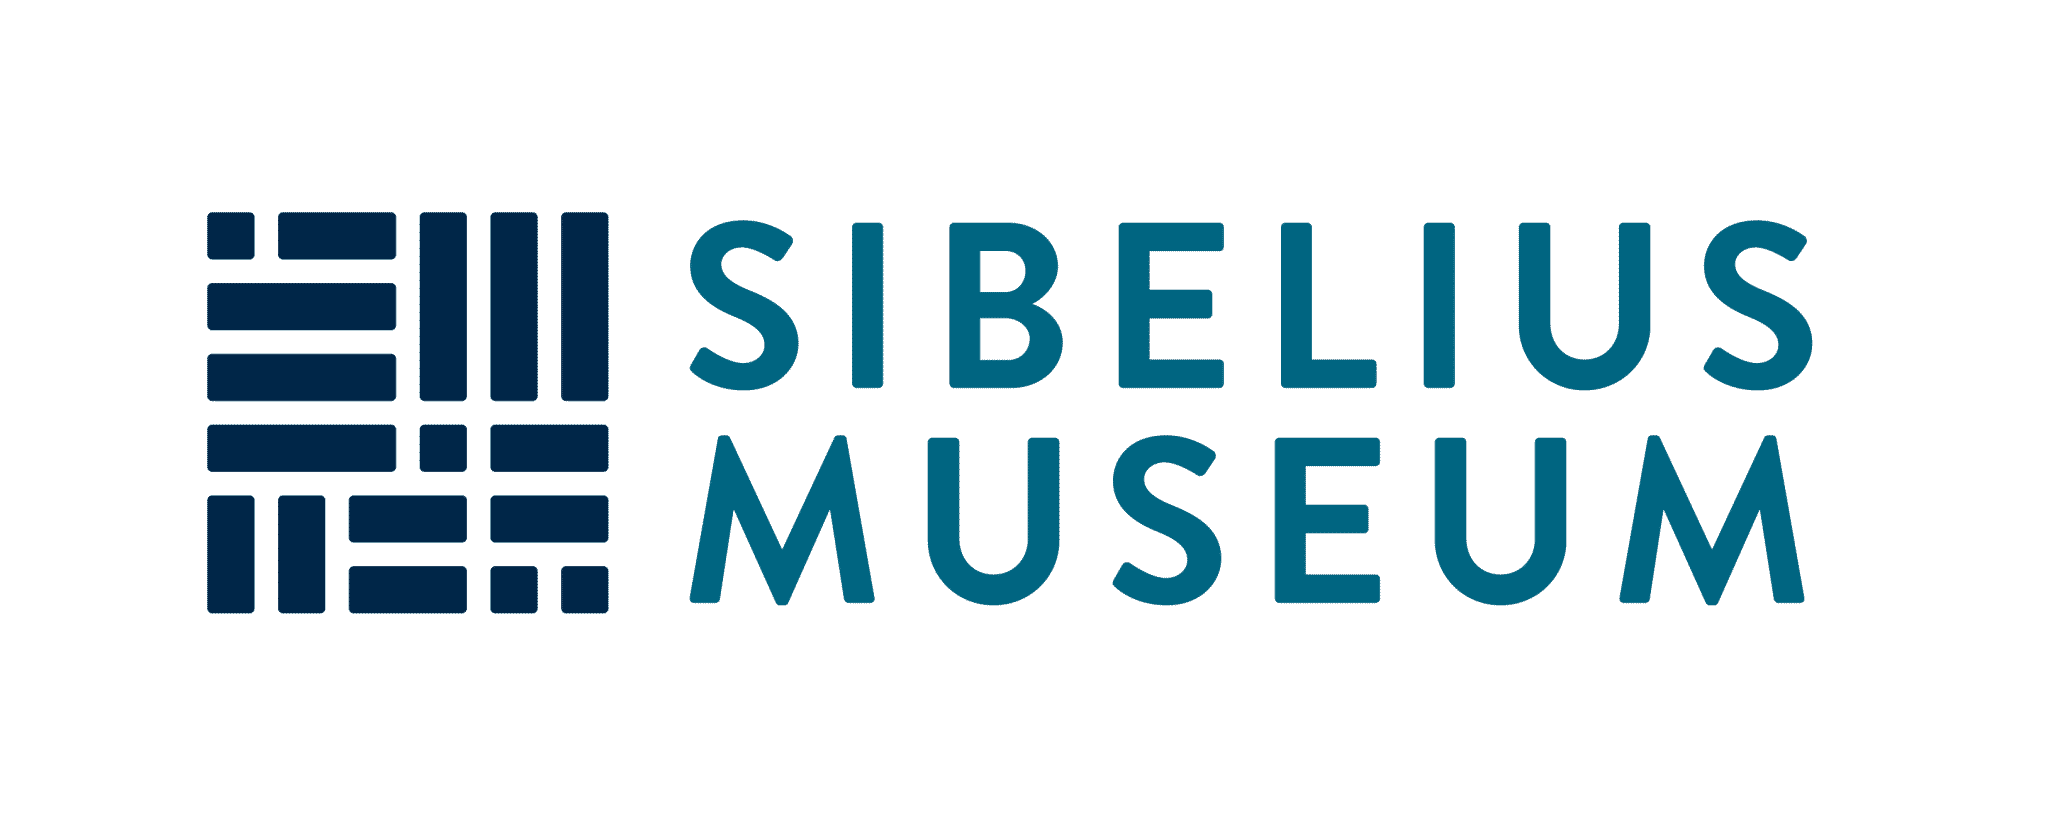 Sibelius-museon logo.